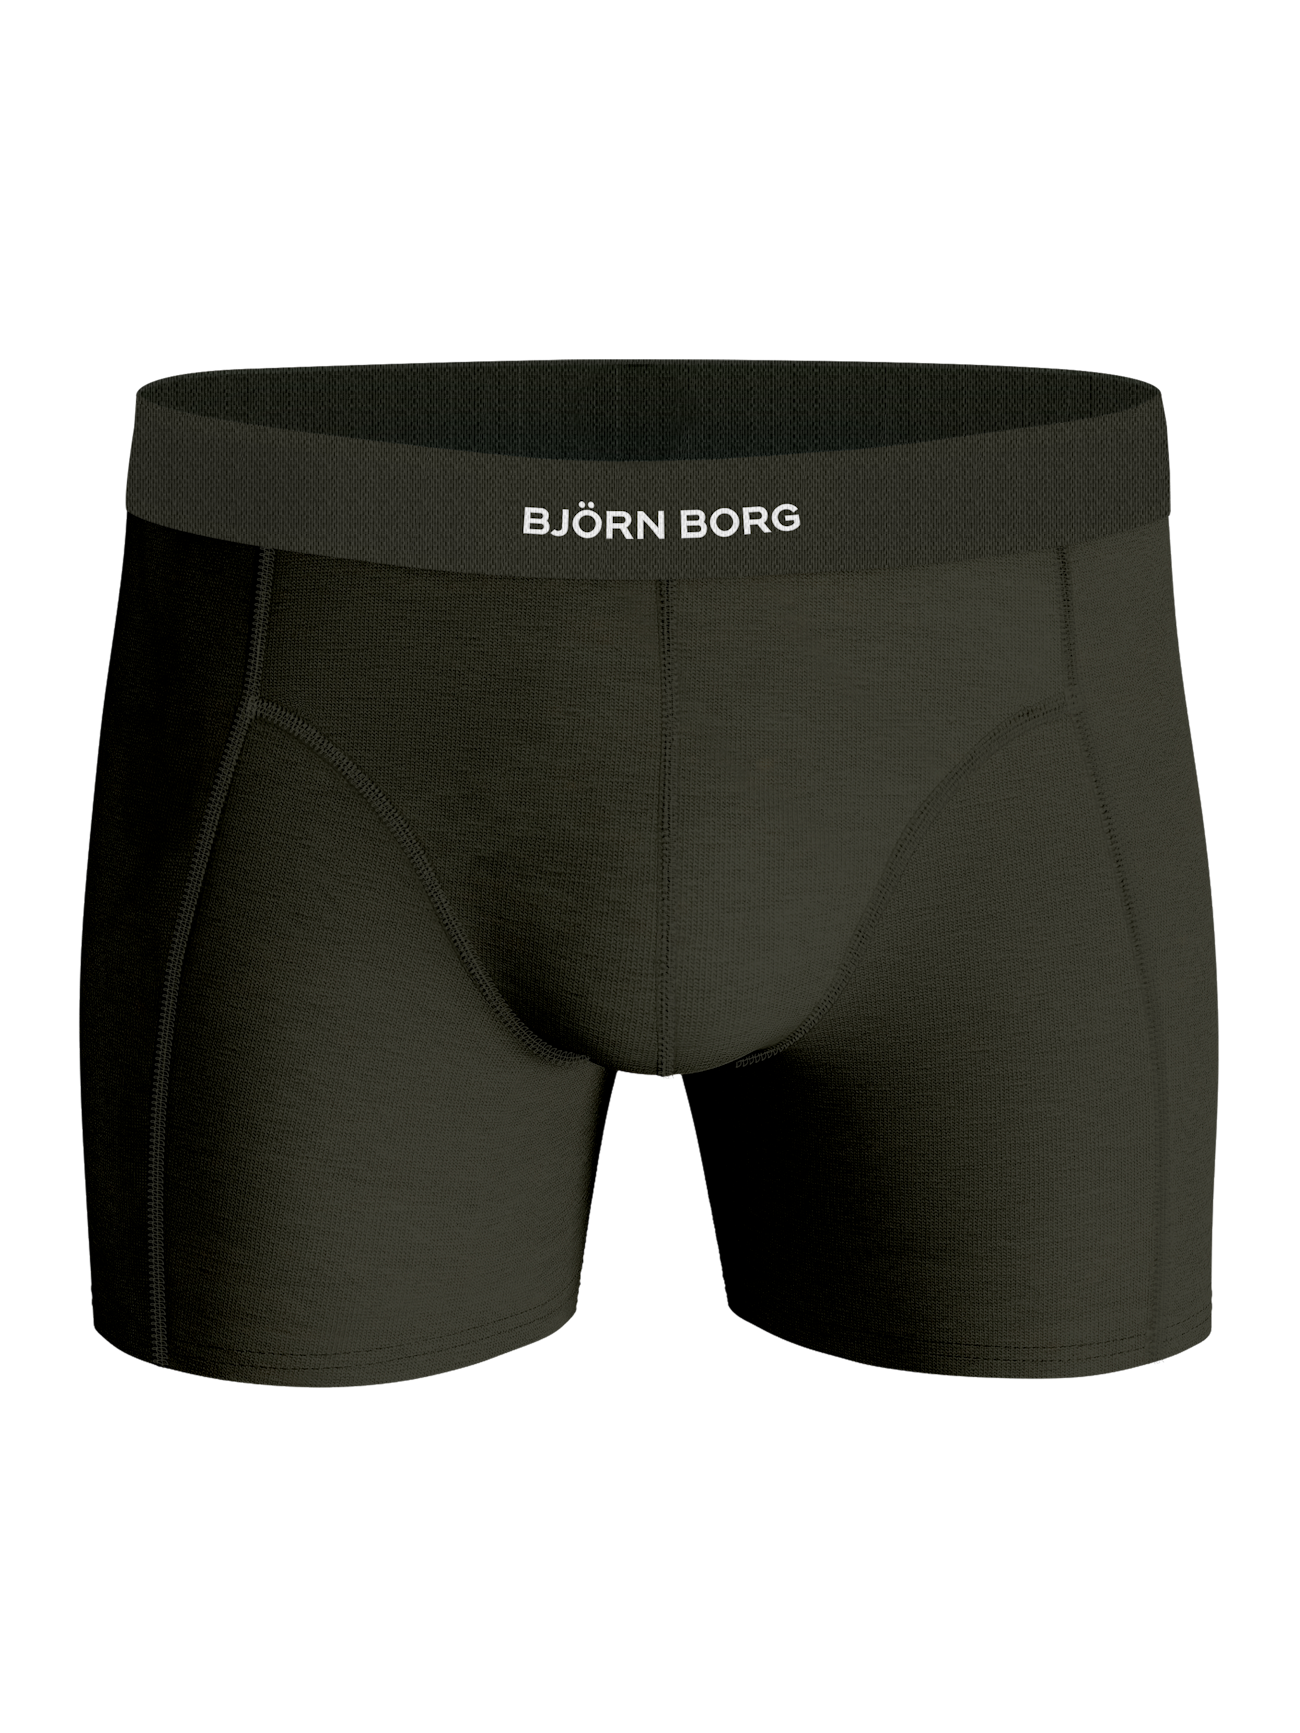 Björn Borg Premium Cotton Stretch Boxershort 2-Pack - Black & Navy